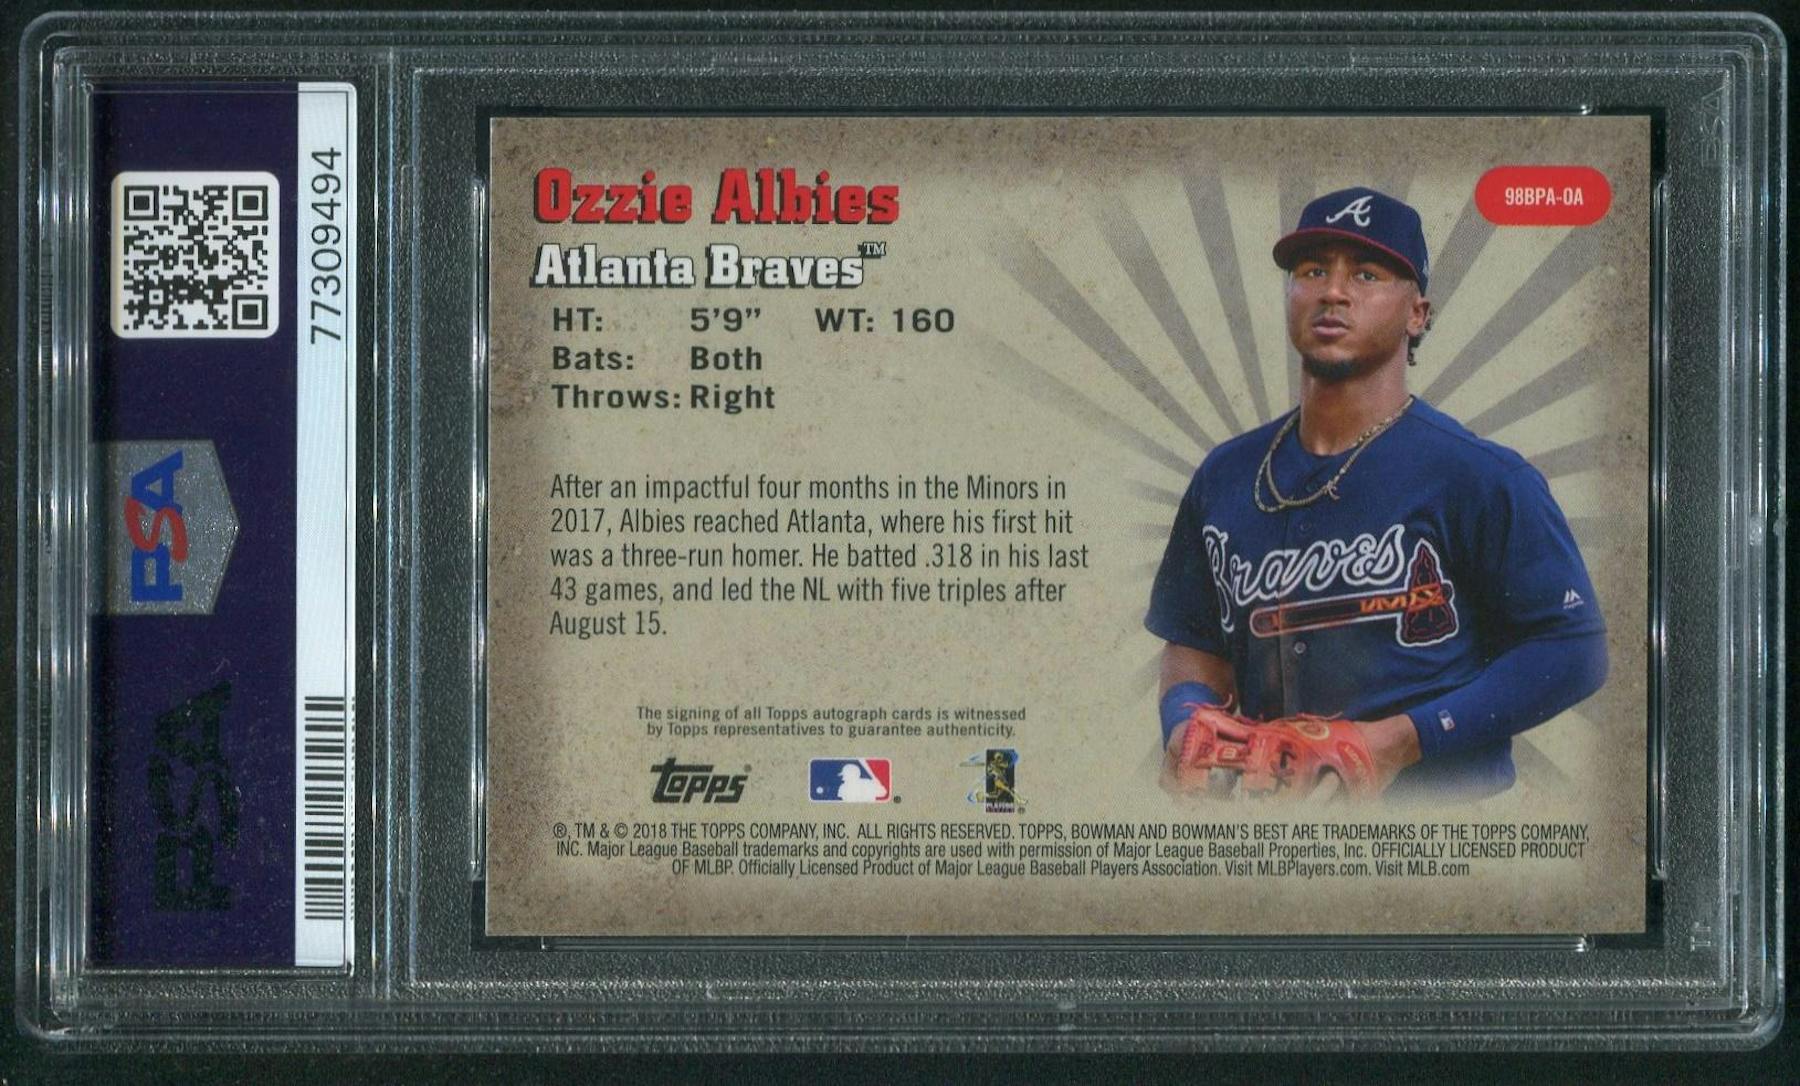 Ozzie Albies (Team-Issued or Game-Used) 2019 Atlanta Braves Hank